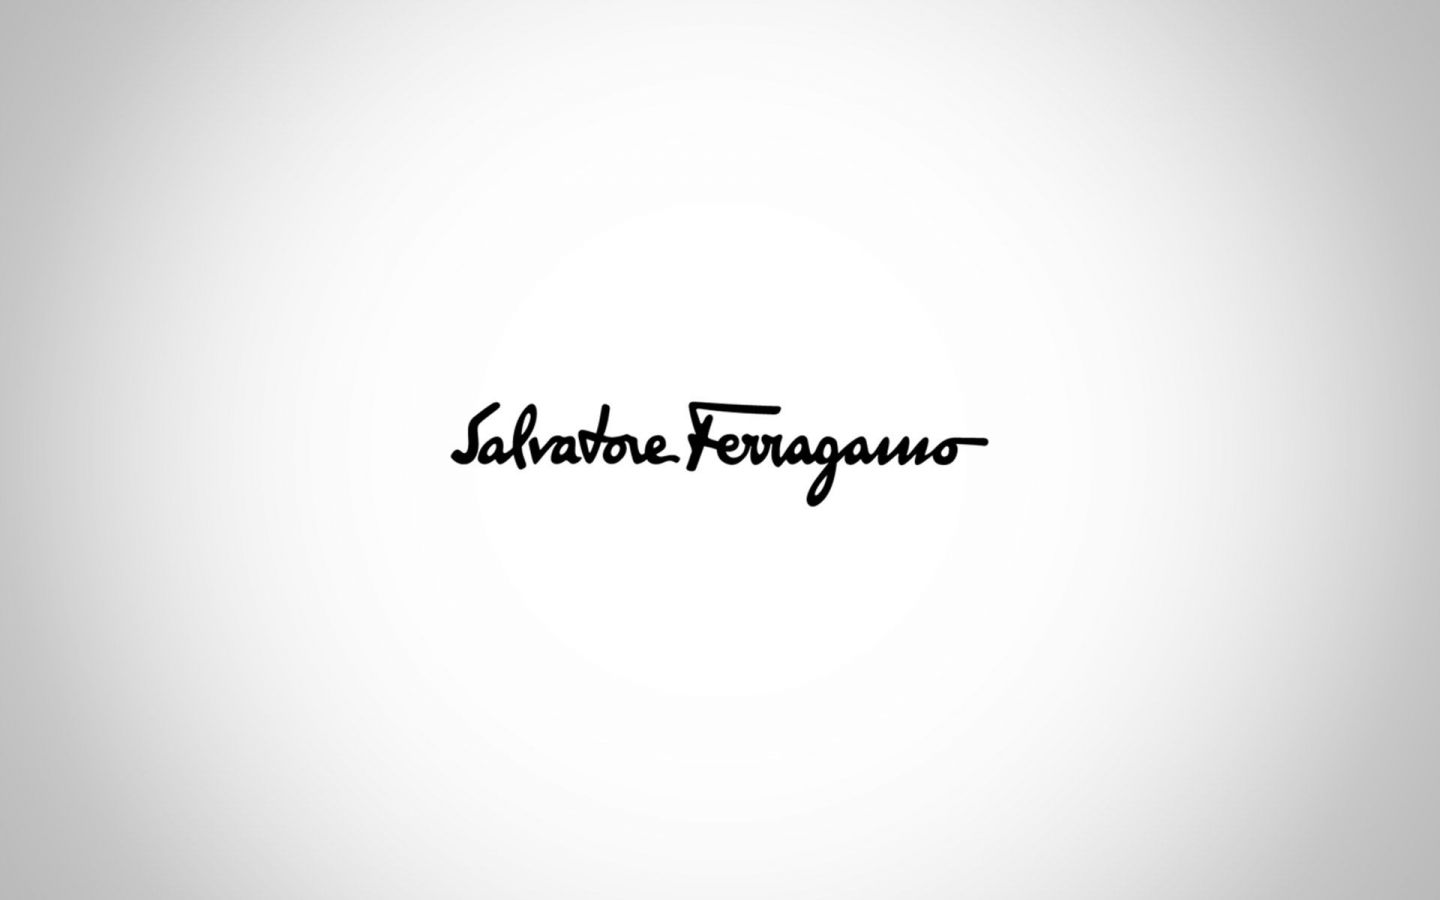 Salvatore Ferragamo Watches Crevisio Branding And Photography Agency